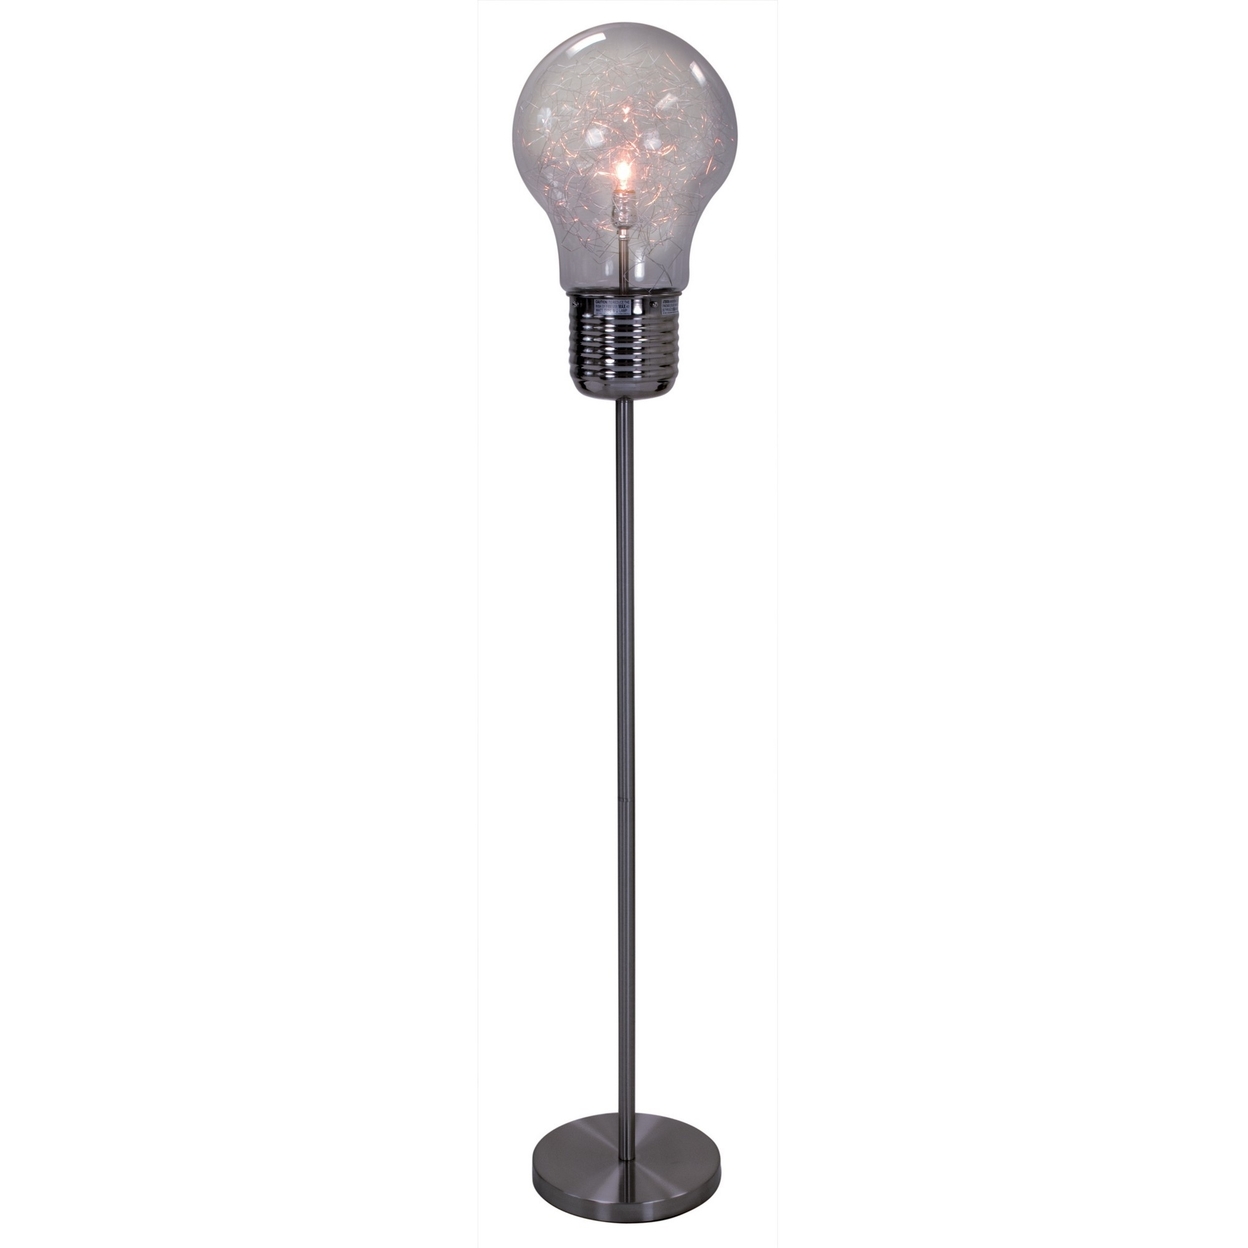 Febe 65 Inch Floor Lamp, Large Bulb Shade, Glass, Metal, Black Nickel -Saltoro Sherpi